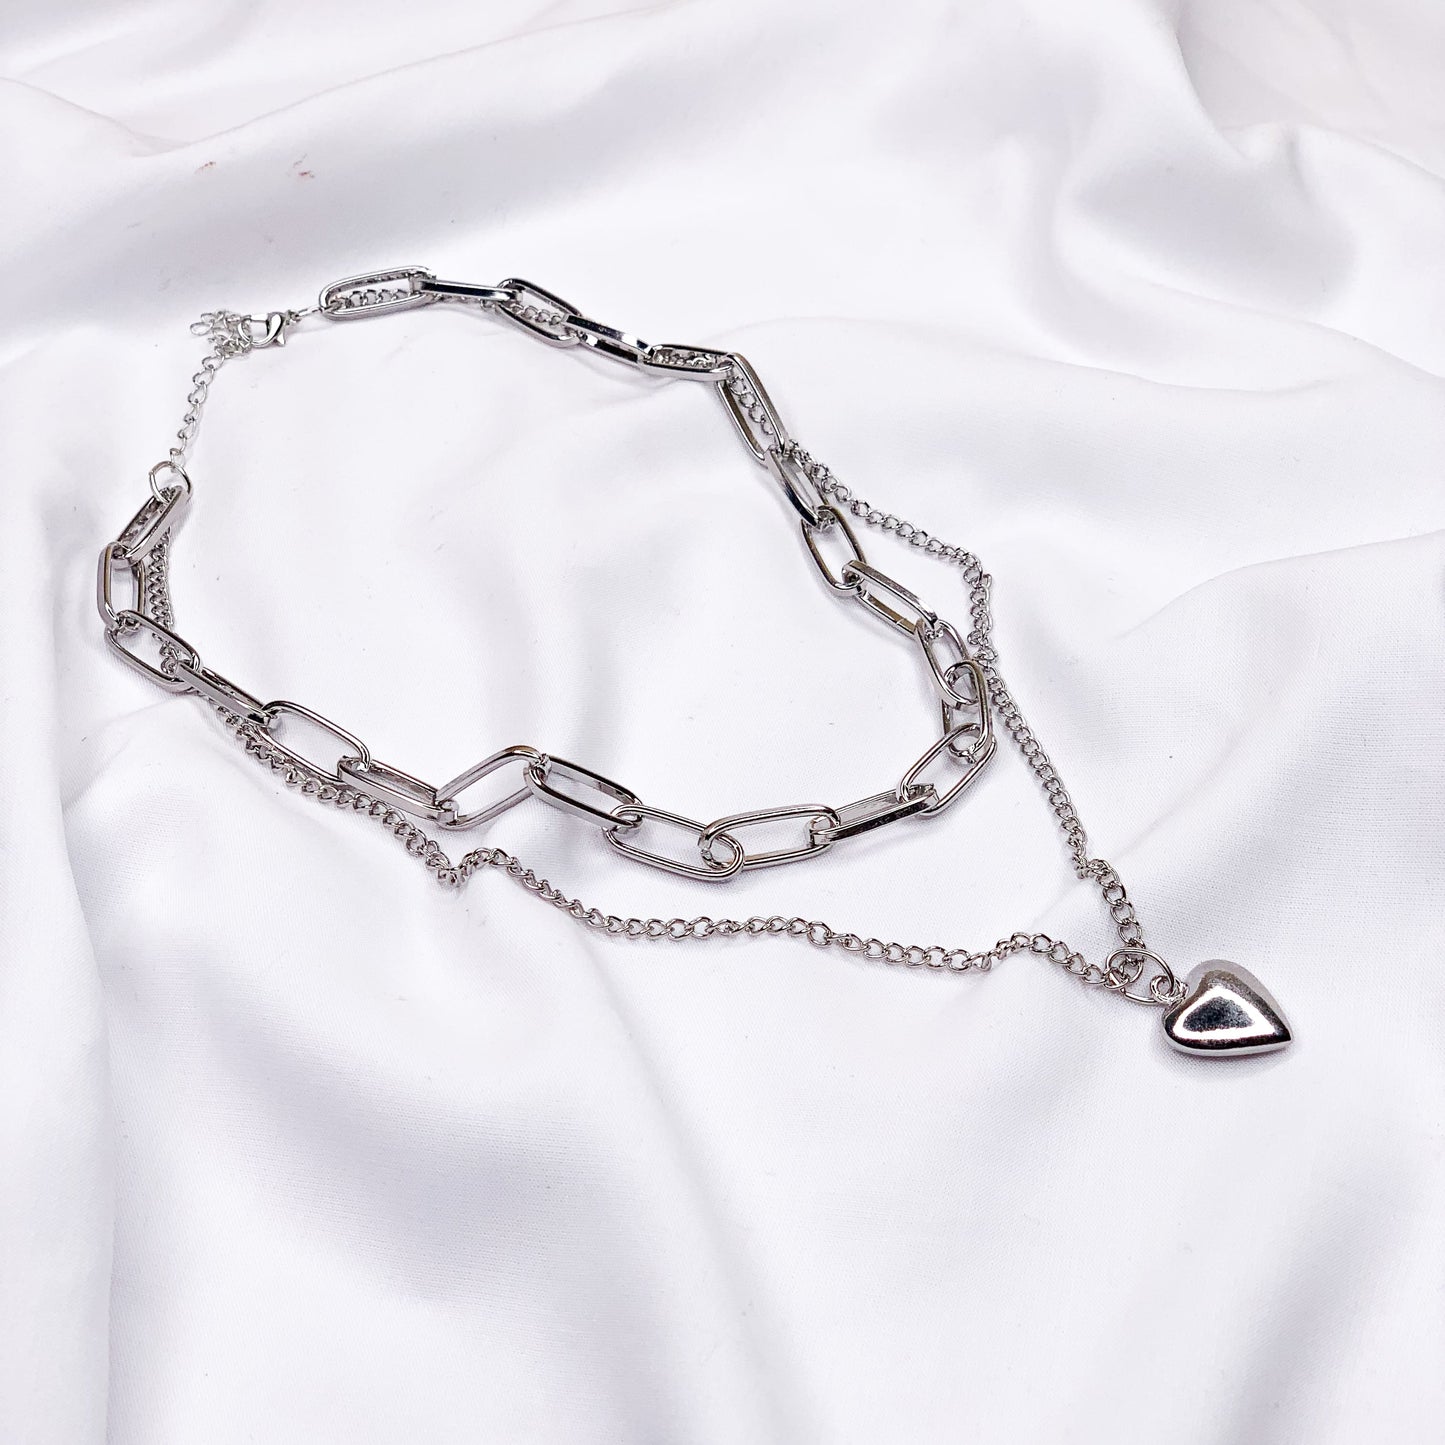 Hellen.V - Steel Necklace | Chain Heart Pendant | Chain Necklace